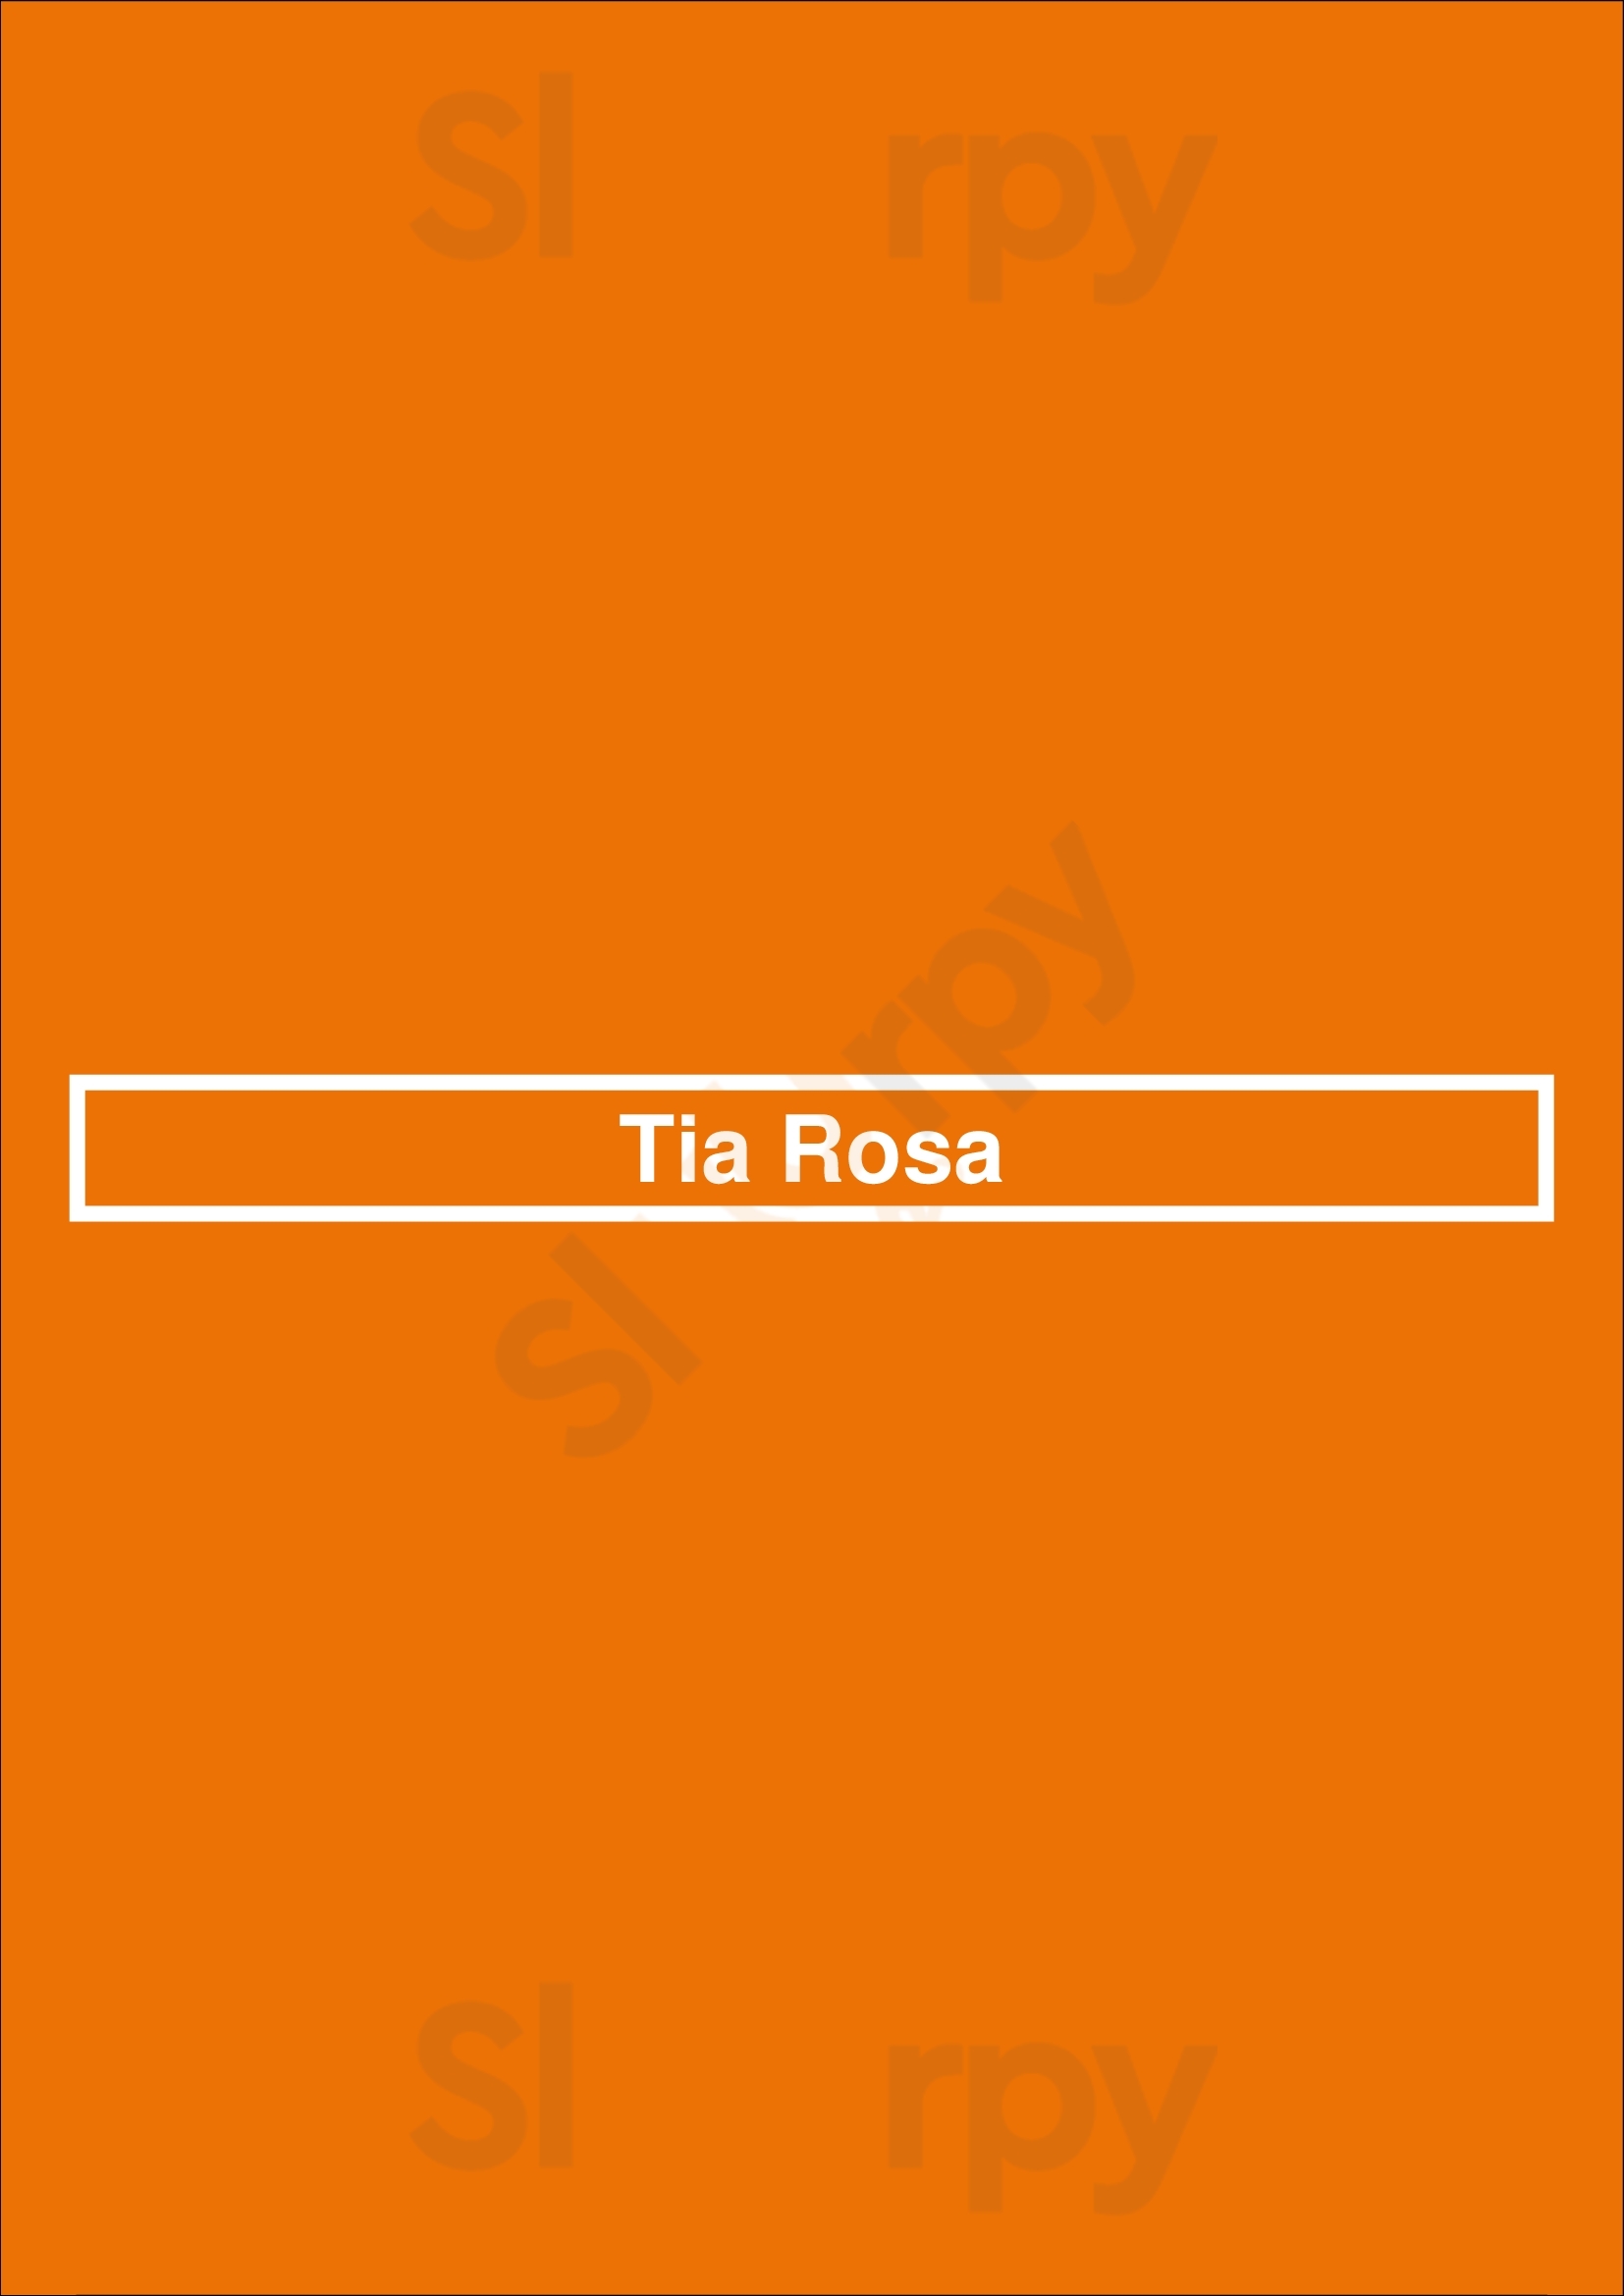 Tia Rosa Amsterdam Menu - 1